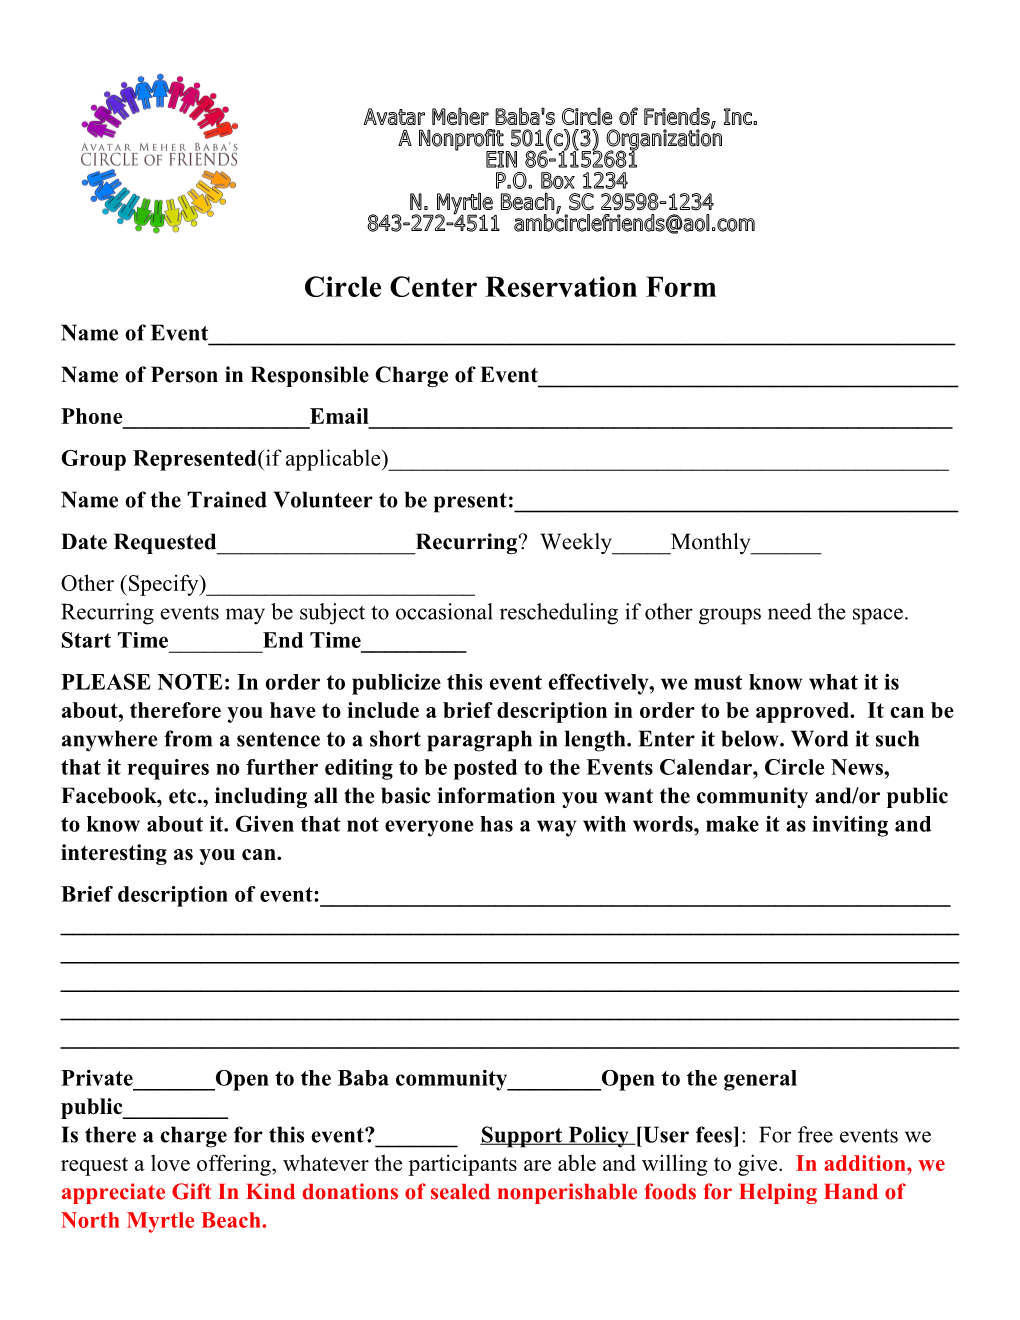 Circle Center Reservation Form